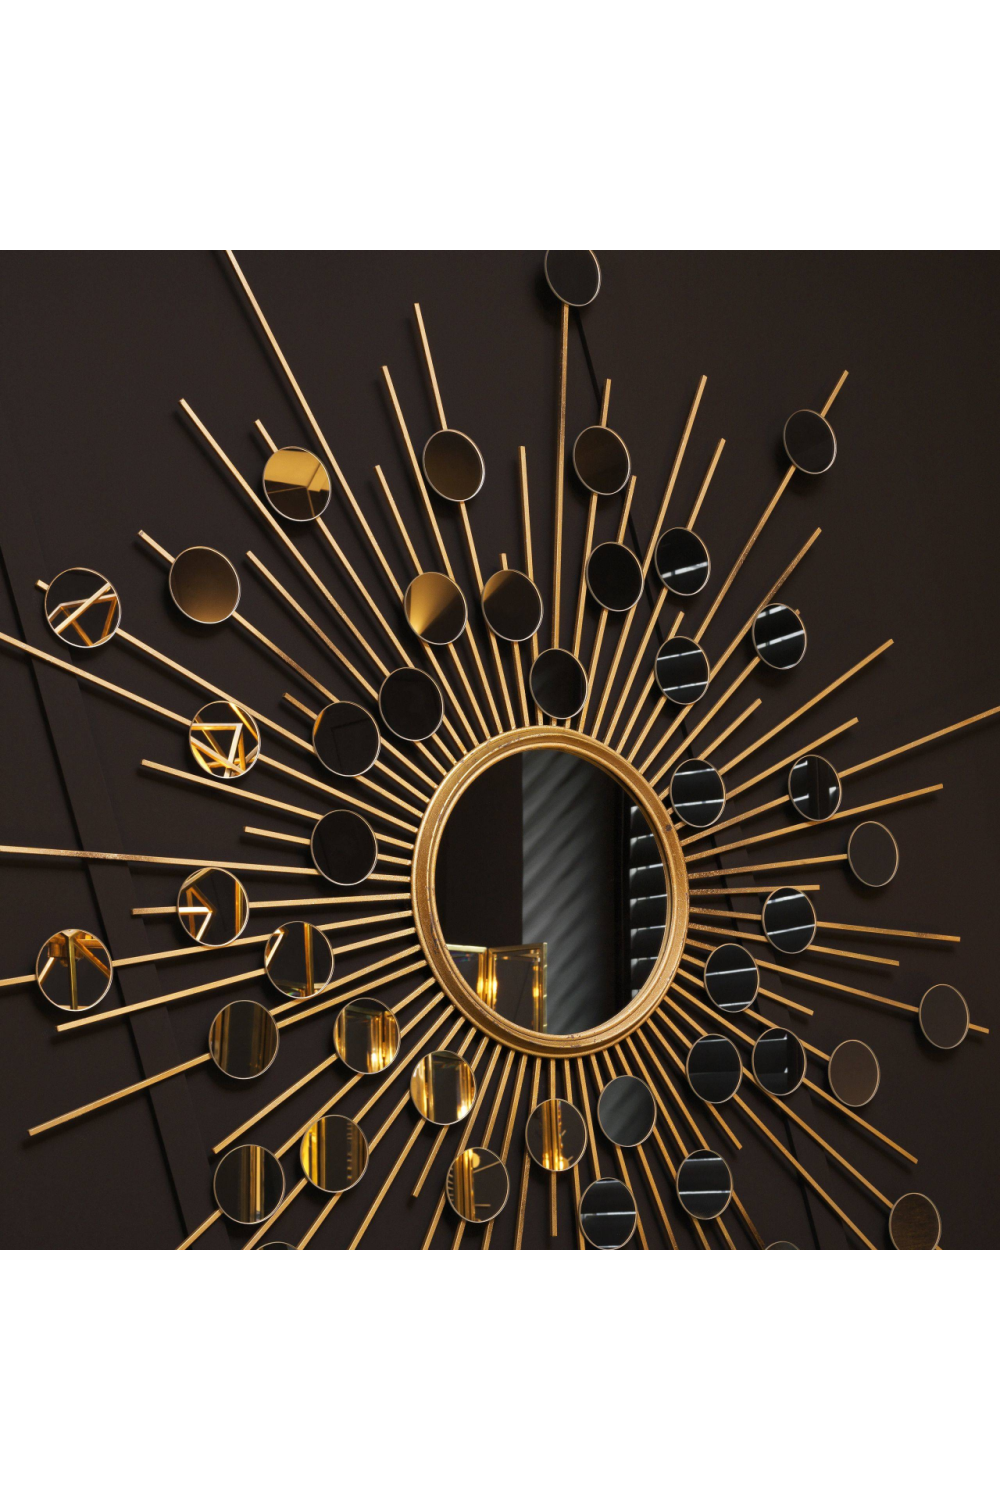 Decorative Sun Mirror | Eichholtz Reflections | OROA.com